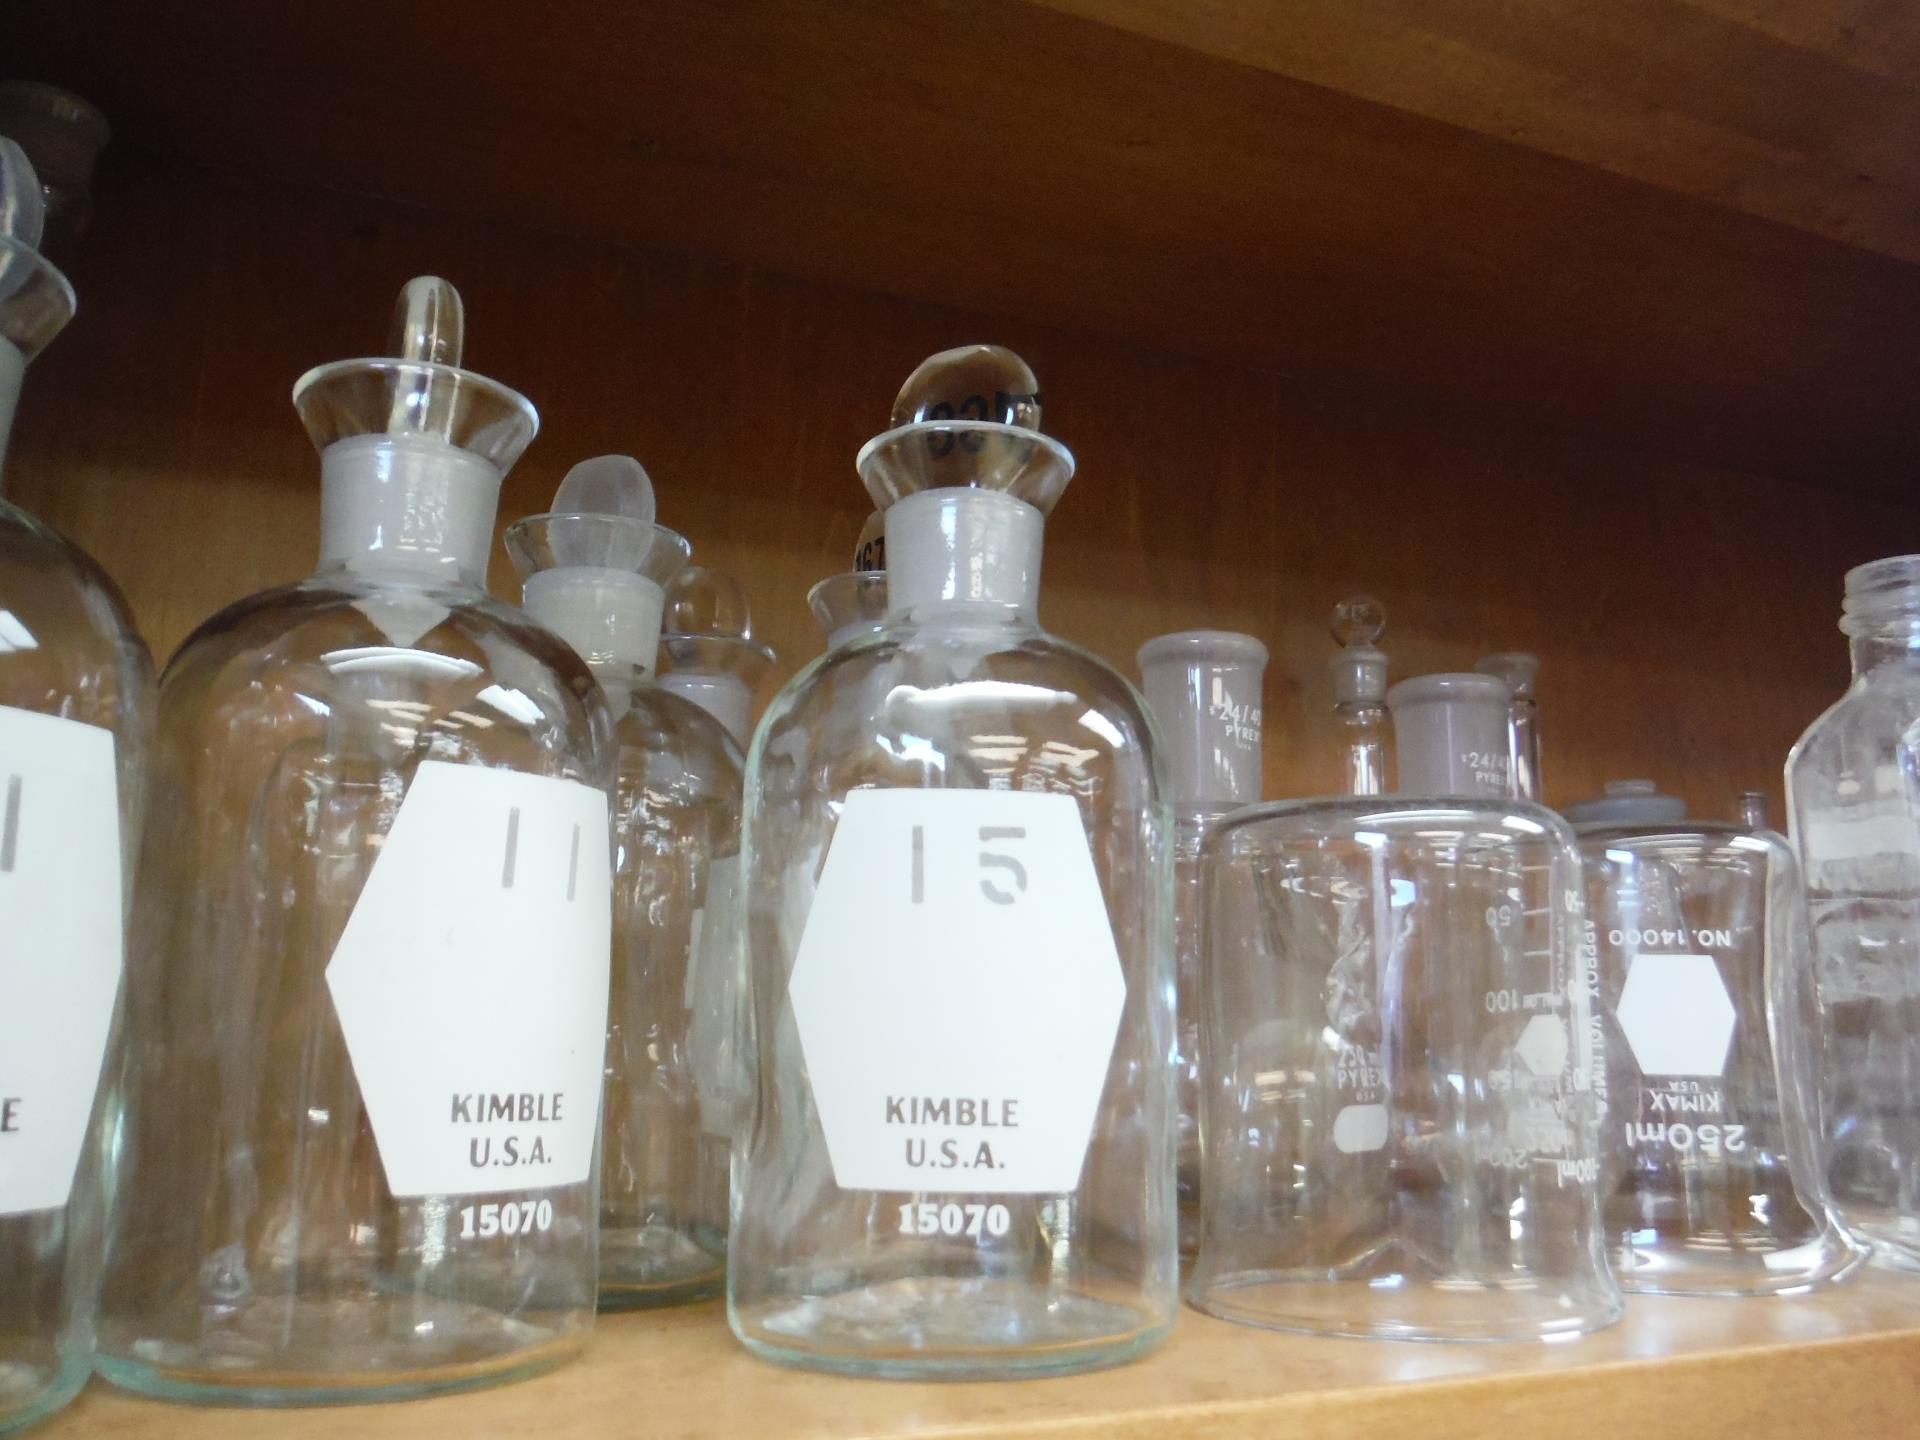 Lab bottles used for testing